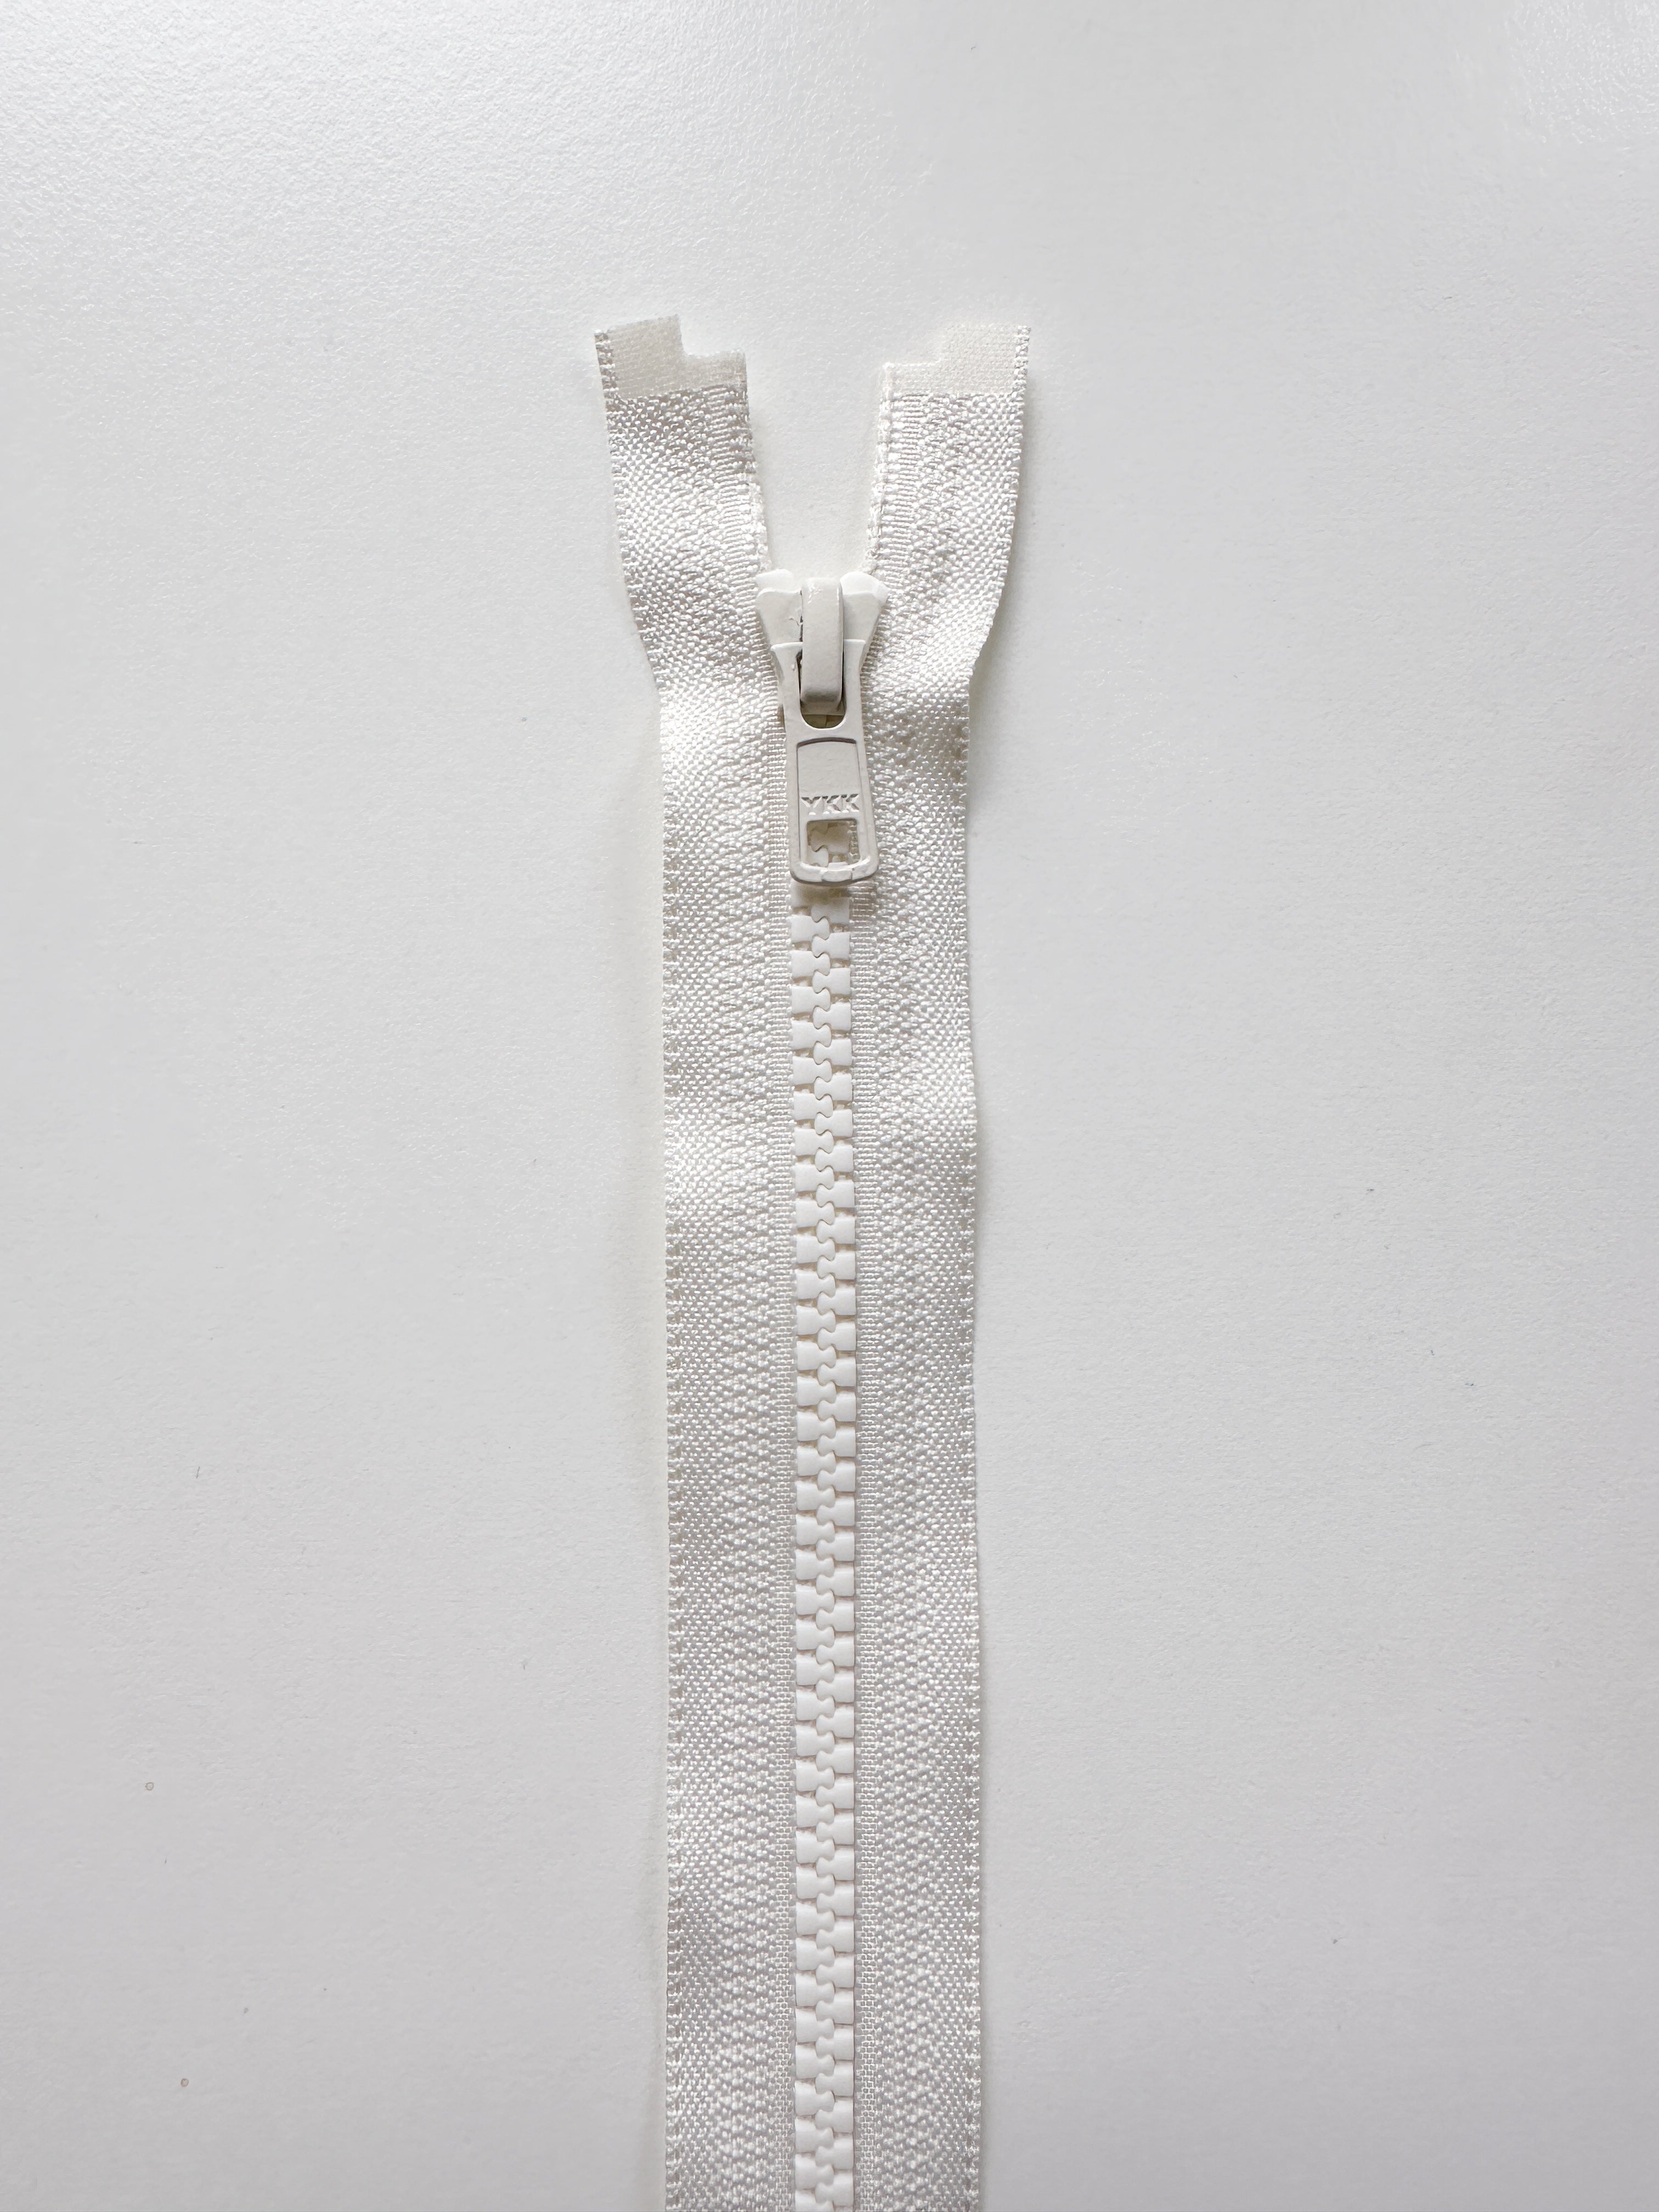 YKK Vislon plastic zippers